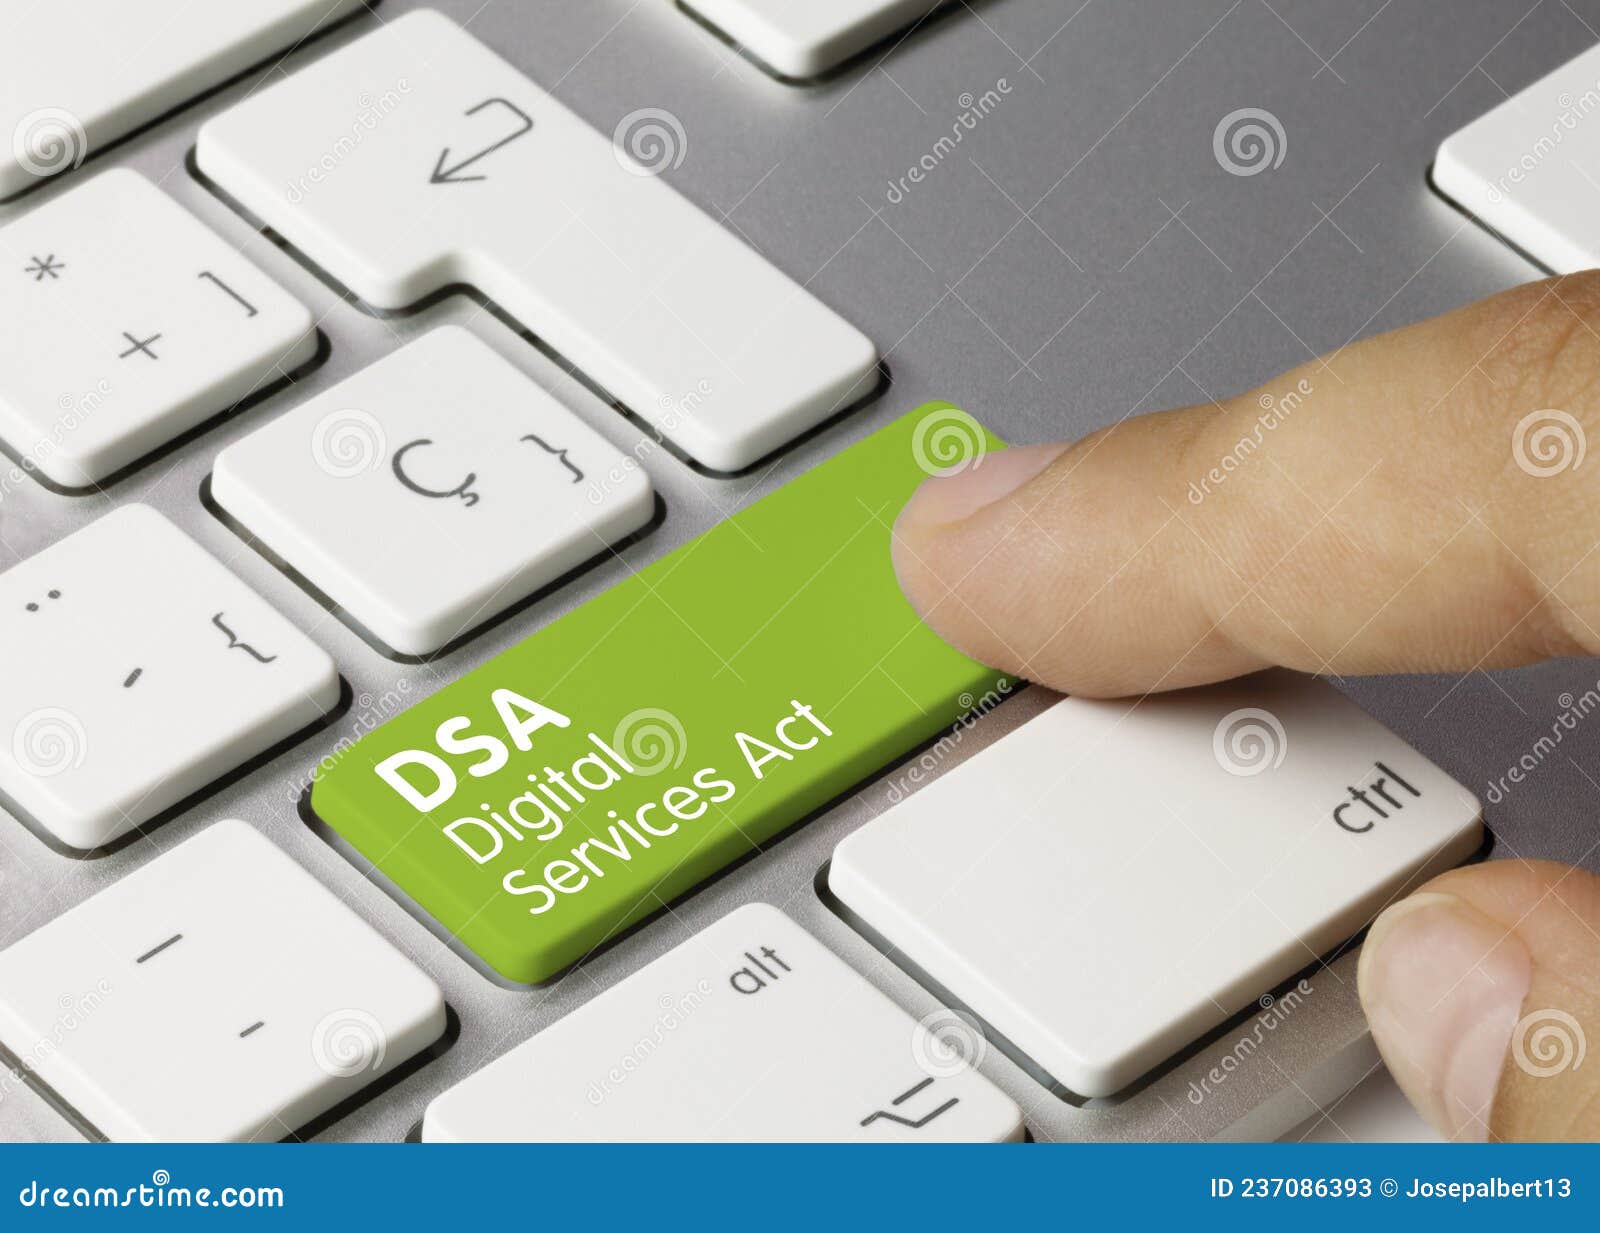 dsa digital services act - inscription on green keyboard key